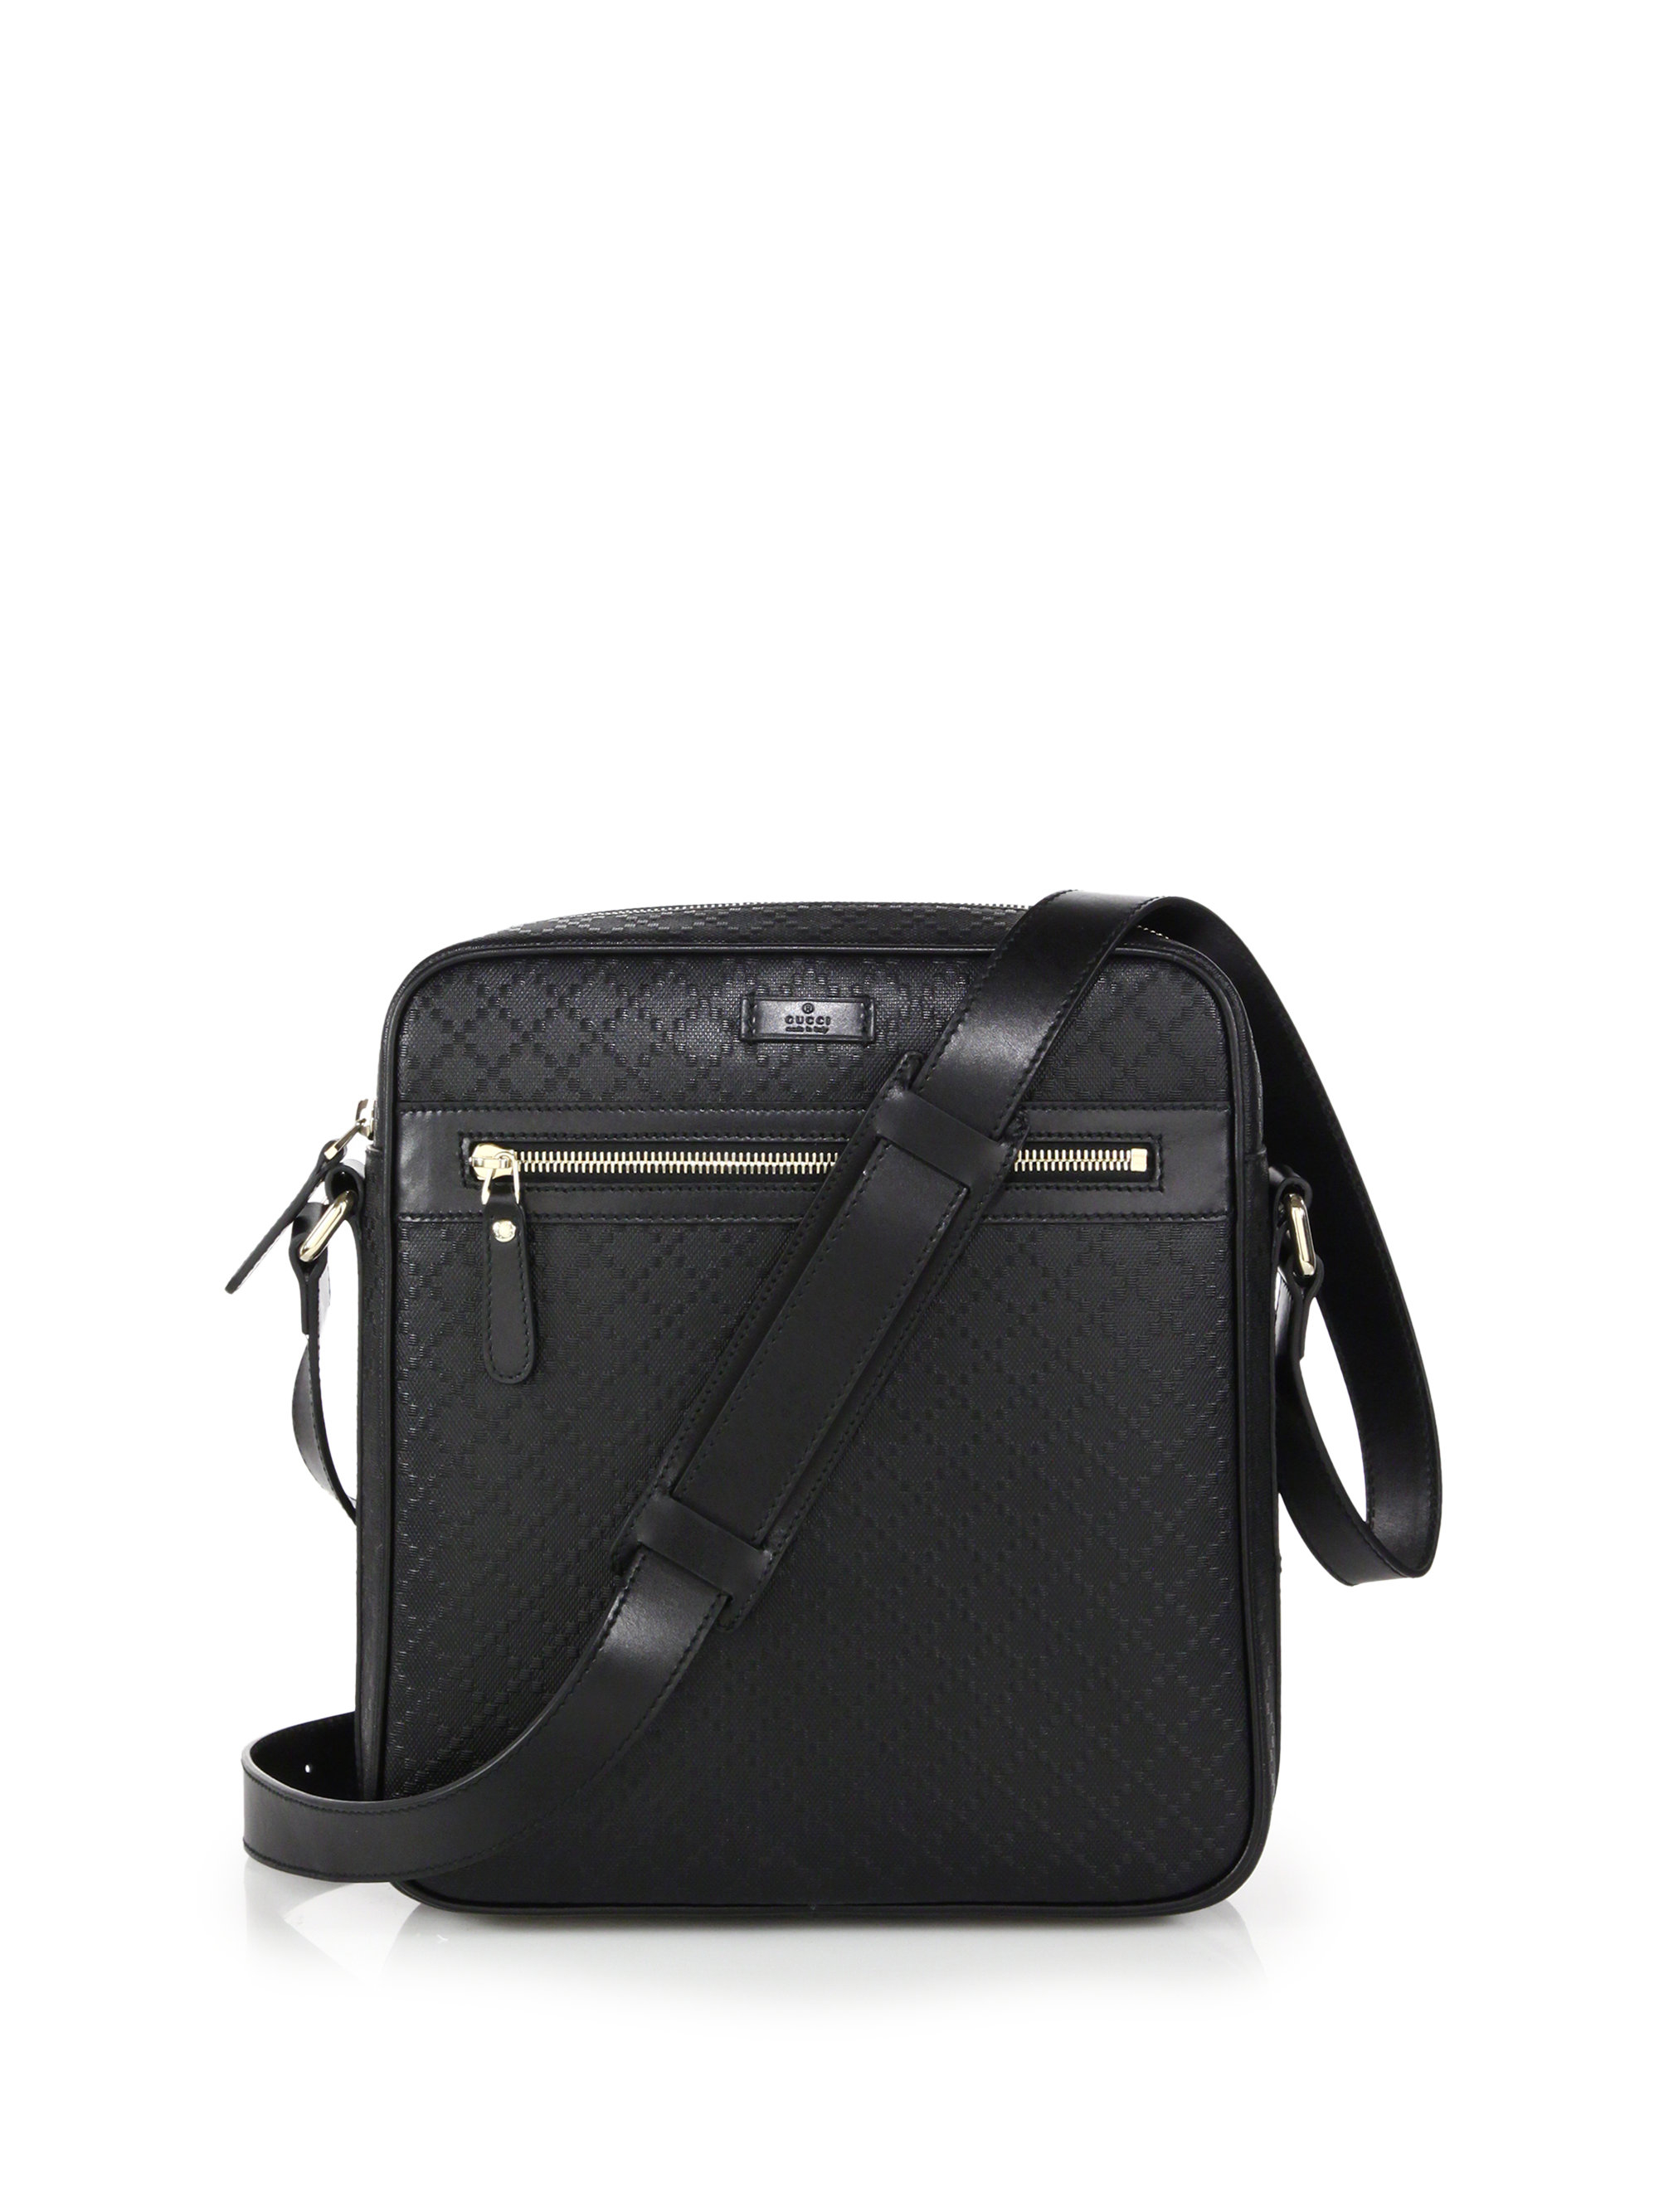 Lyst - Gucci Bright Diamante Leather Shoulder Bag in Black ...